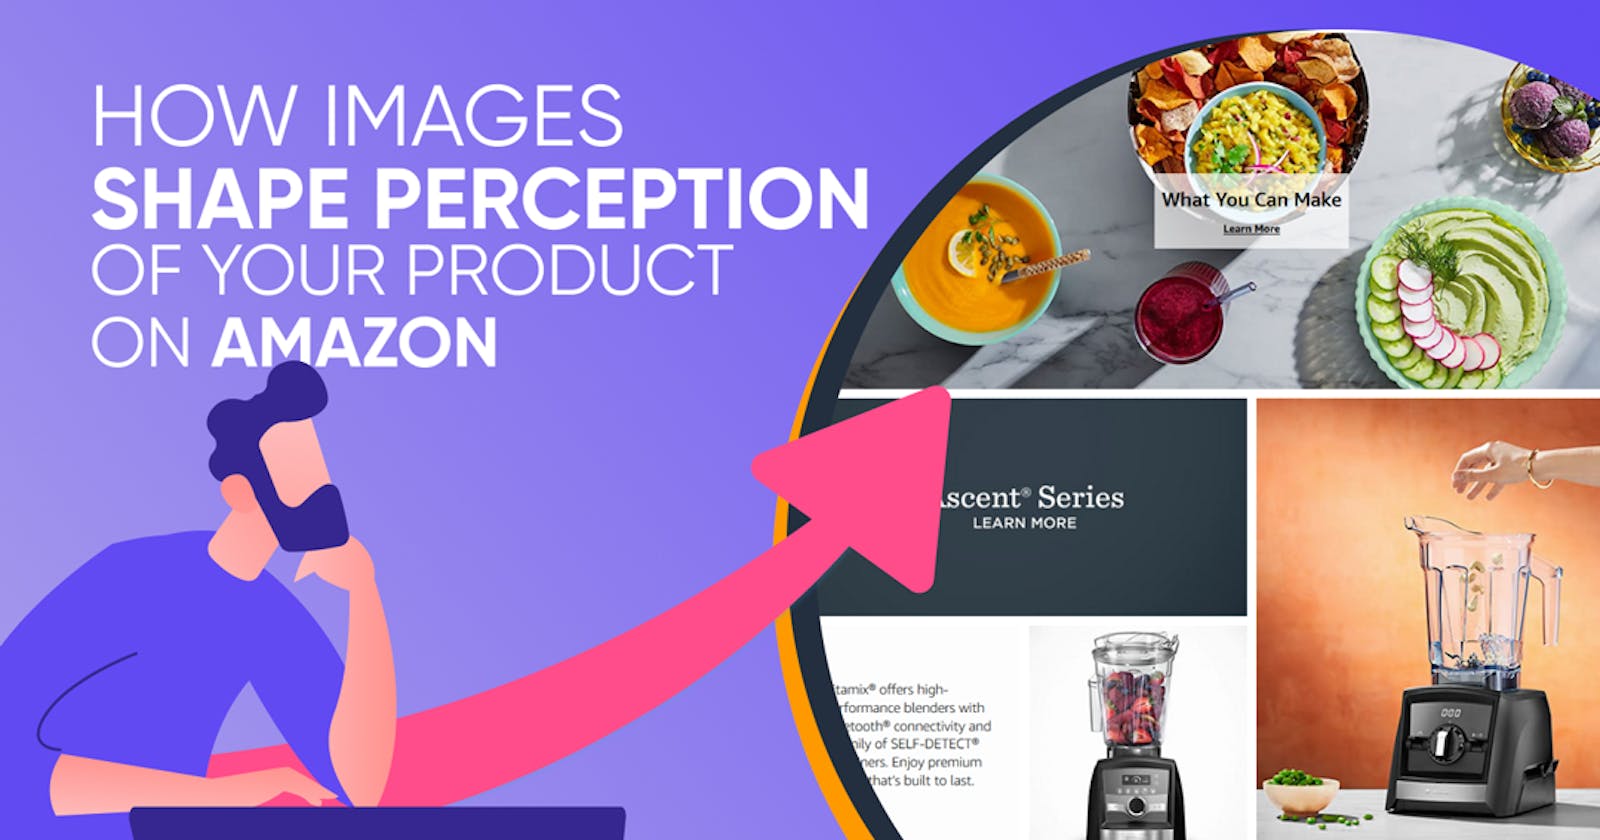 How Amazon's Product Images Shape Customer Perception